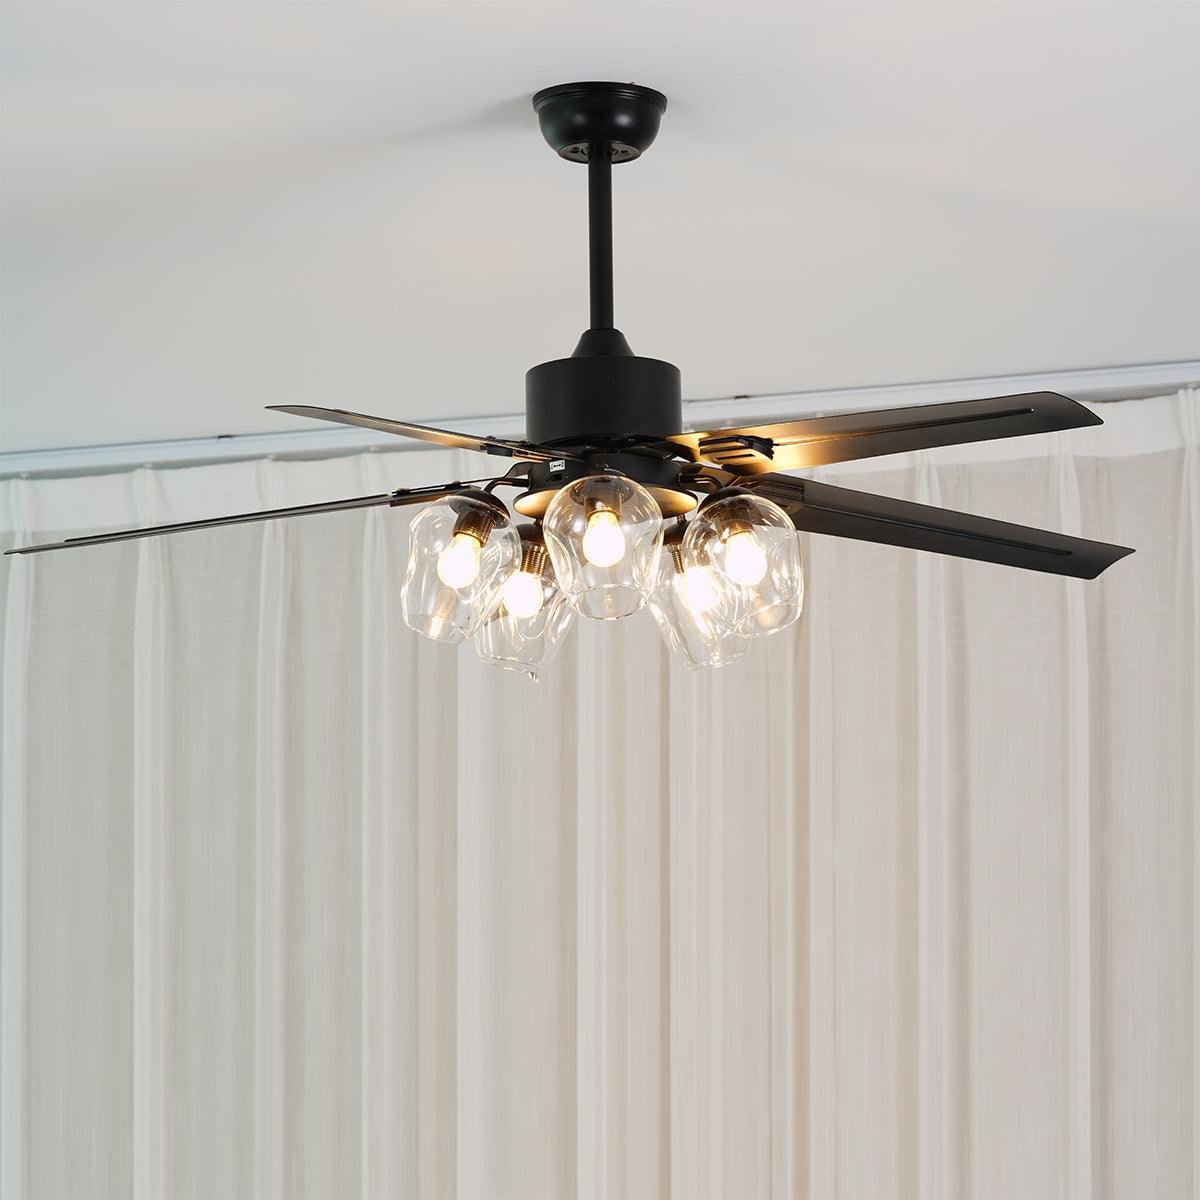 Vintage Black Ceiling Fan, 52-Inch Diameter x 21.7-Inch Height, 132cm Dia x 55cm H, 220V, Model B